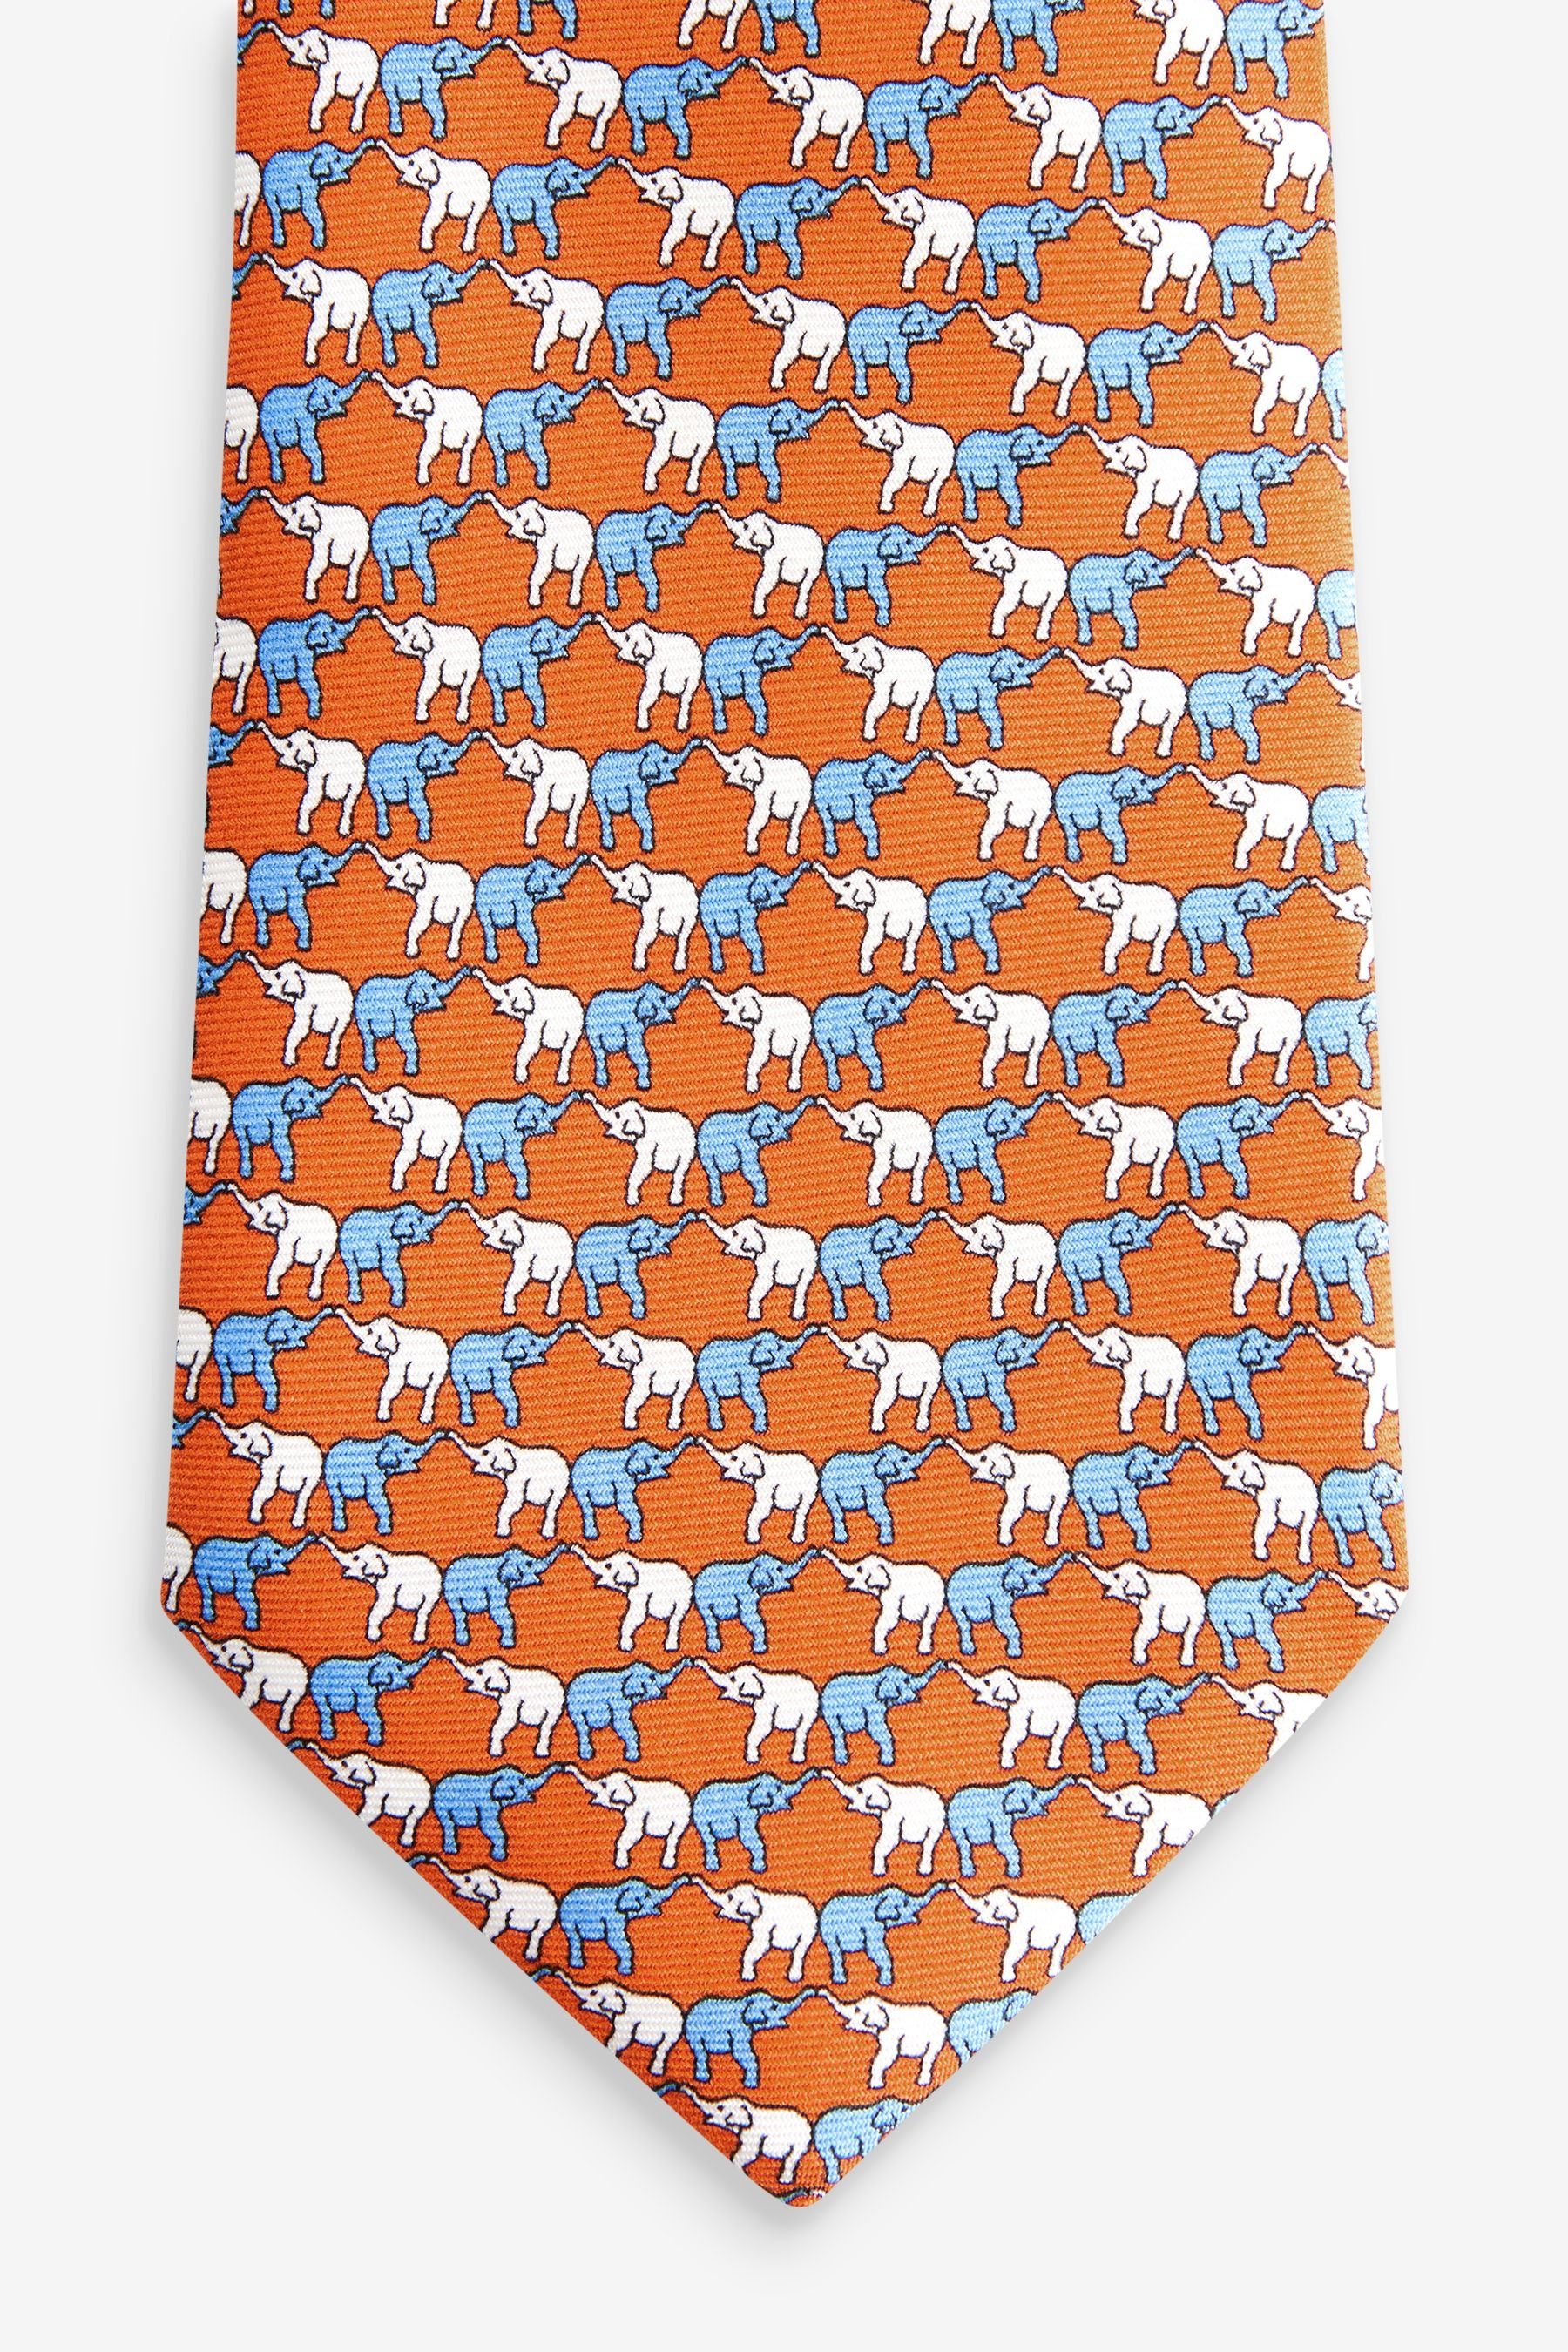 Next Auffällige in Made Orange Signature Elephant (1-St) Italy Krawatte Krawatte